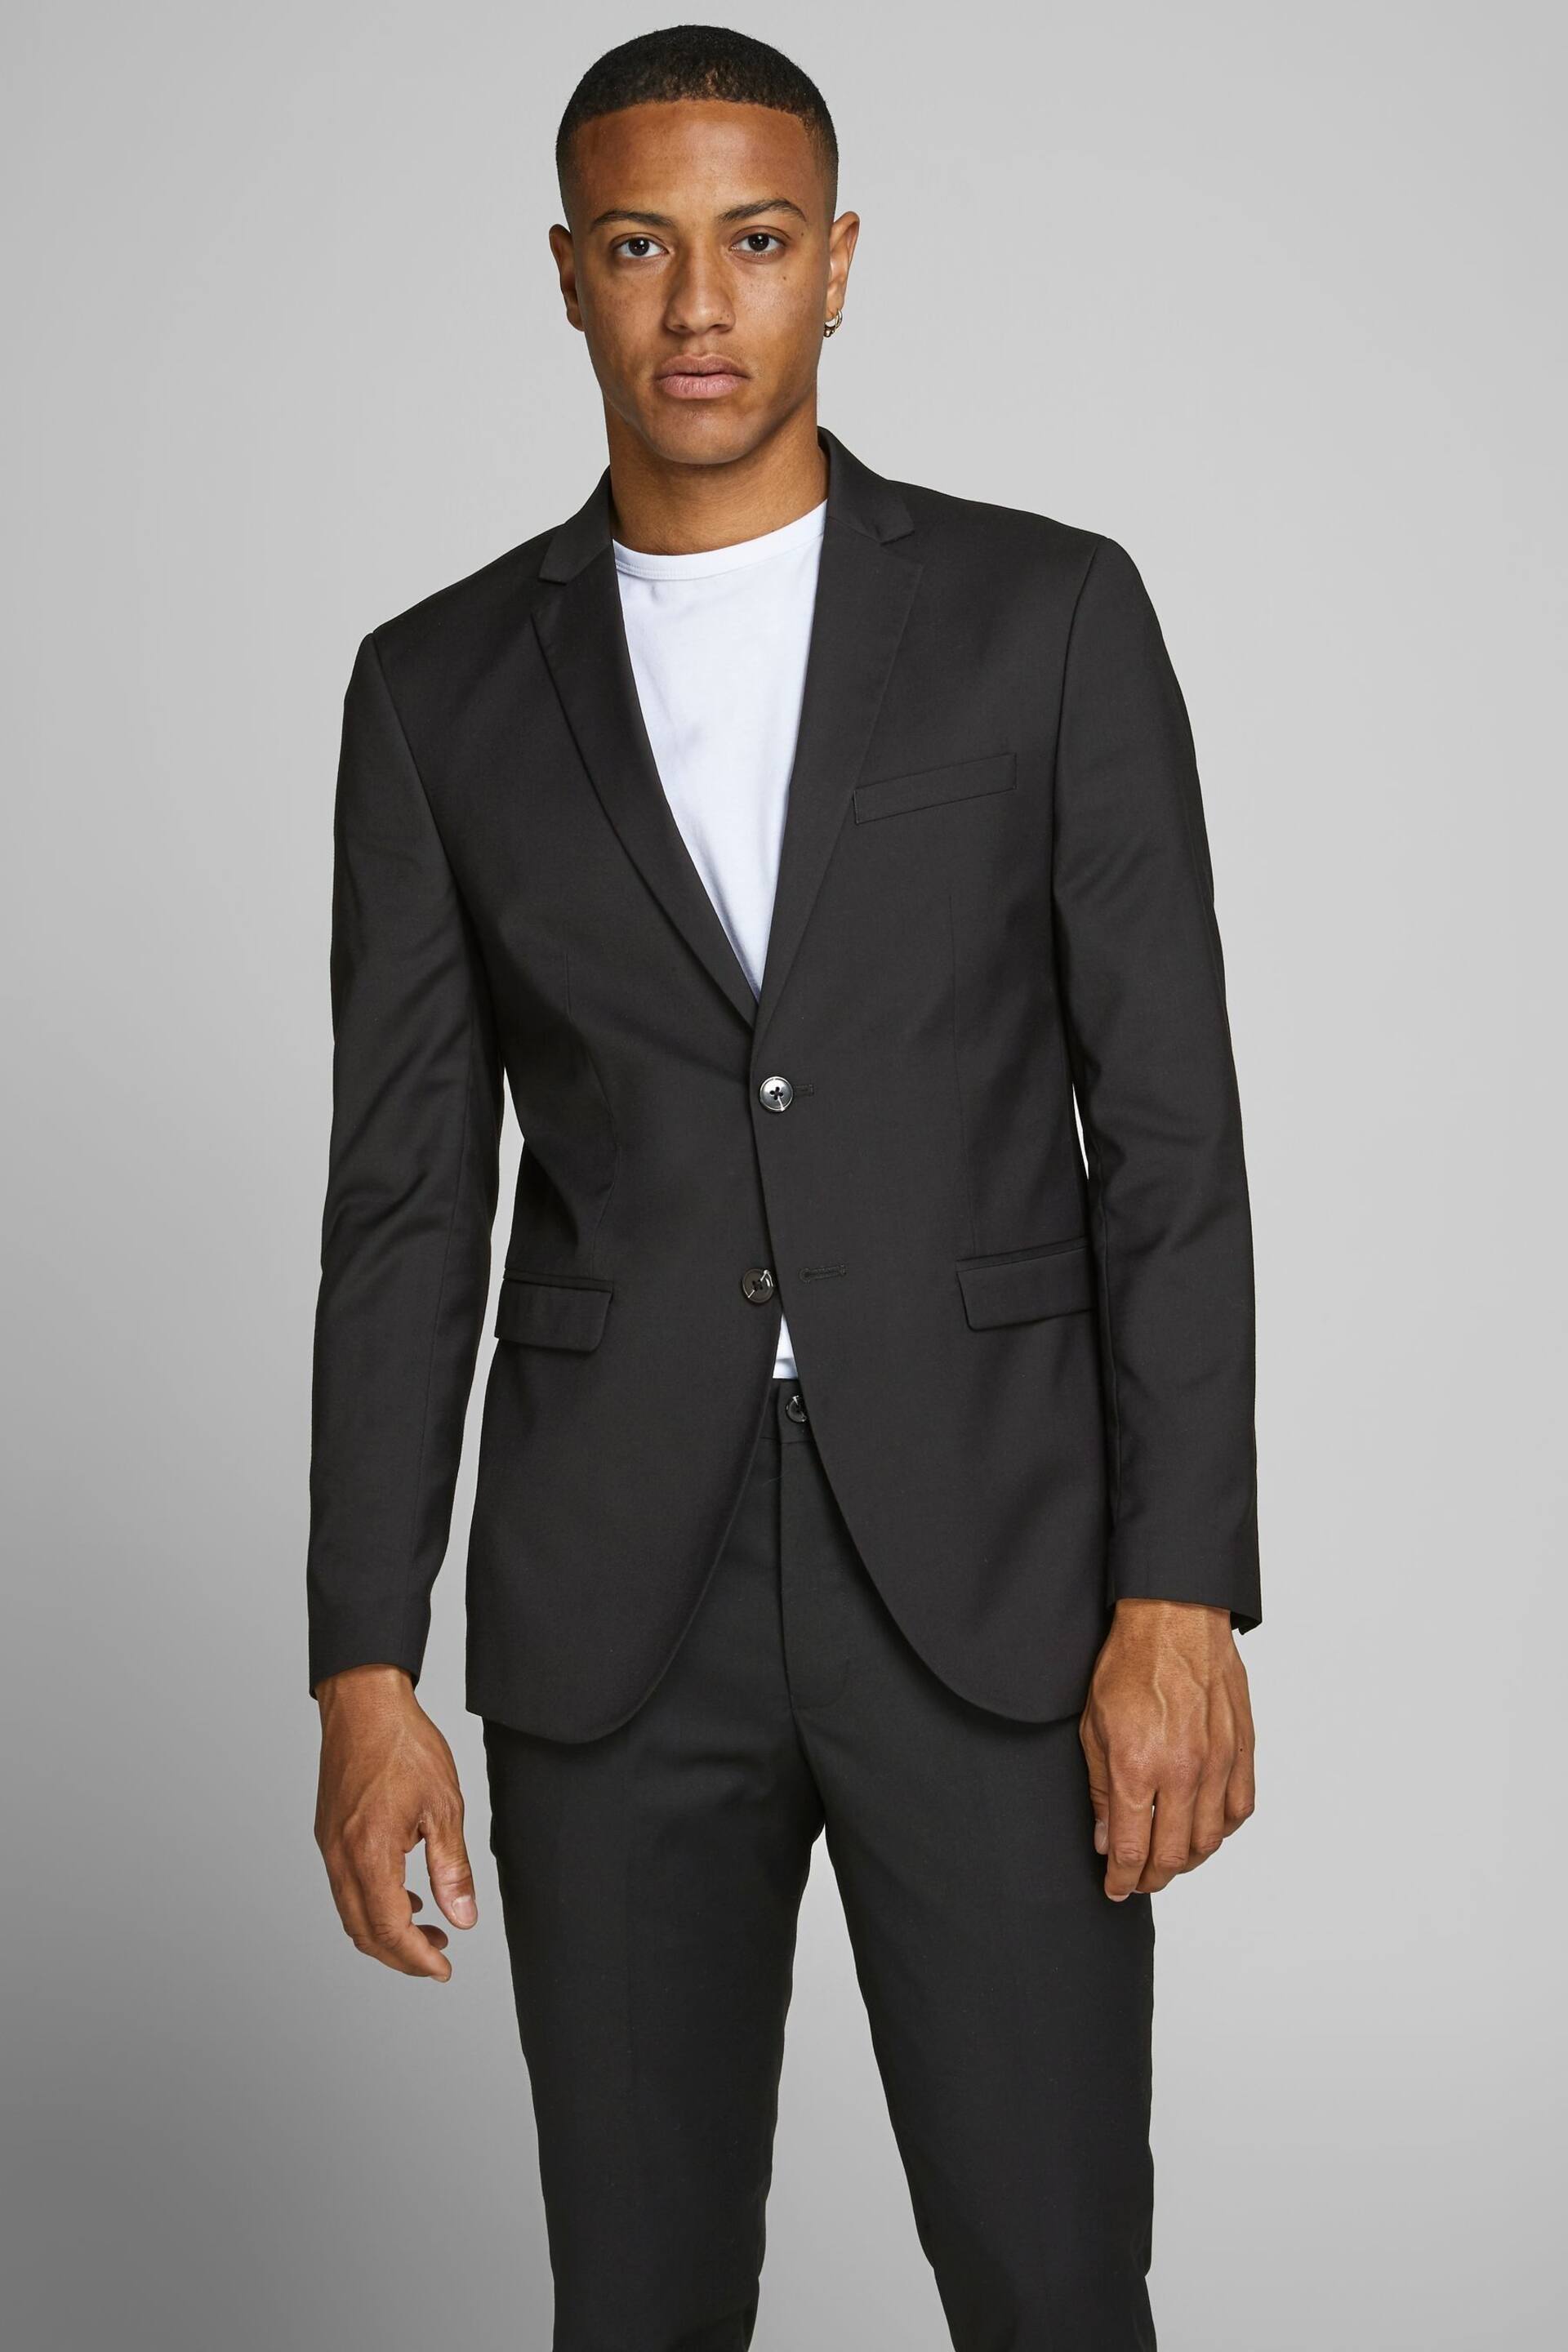 JACK & JONES Black Slim Fit One Button Suit Blazer - Image 1 of 4